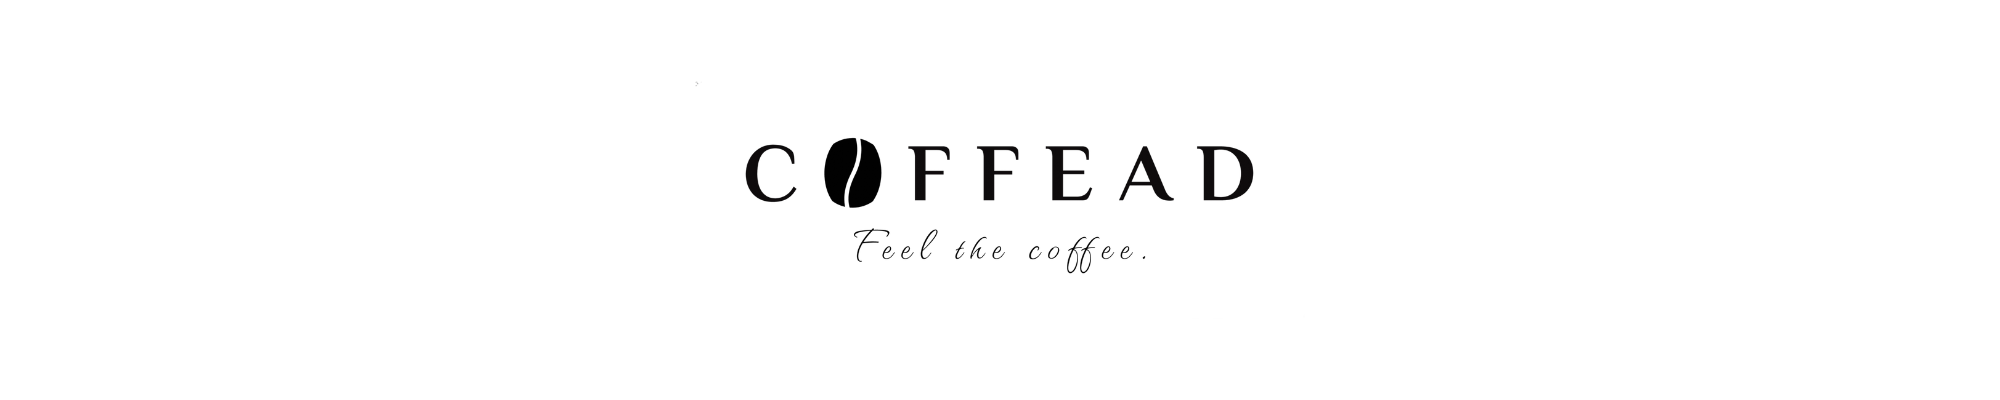 Coffead - Feel the coffee.